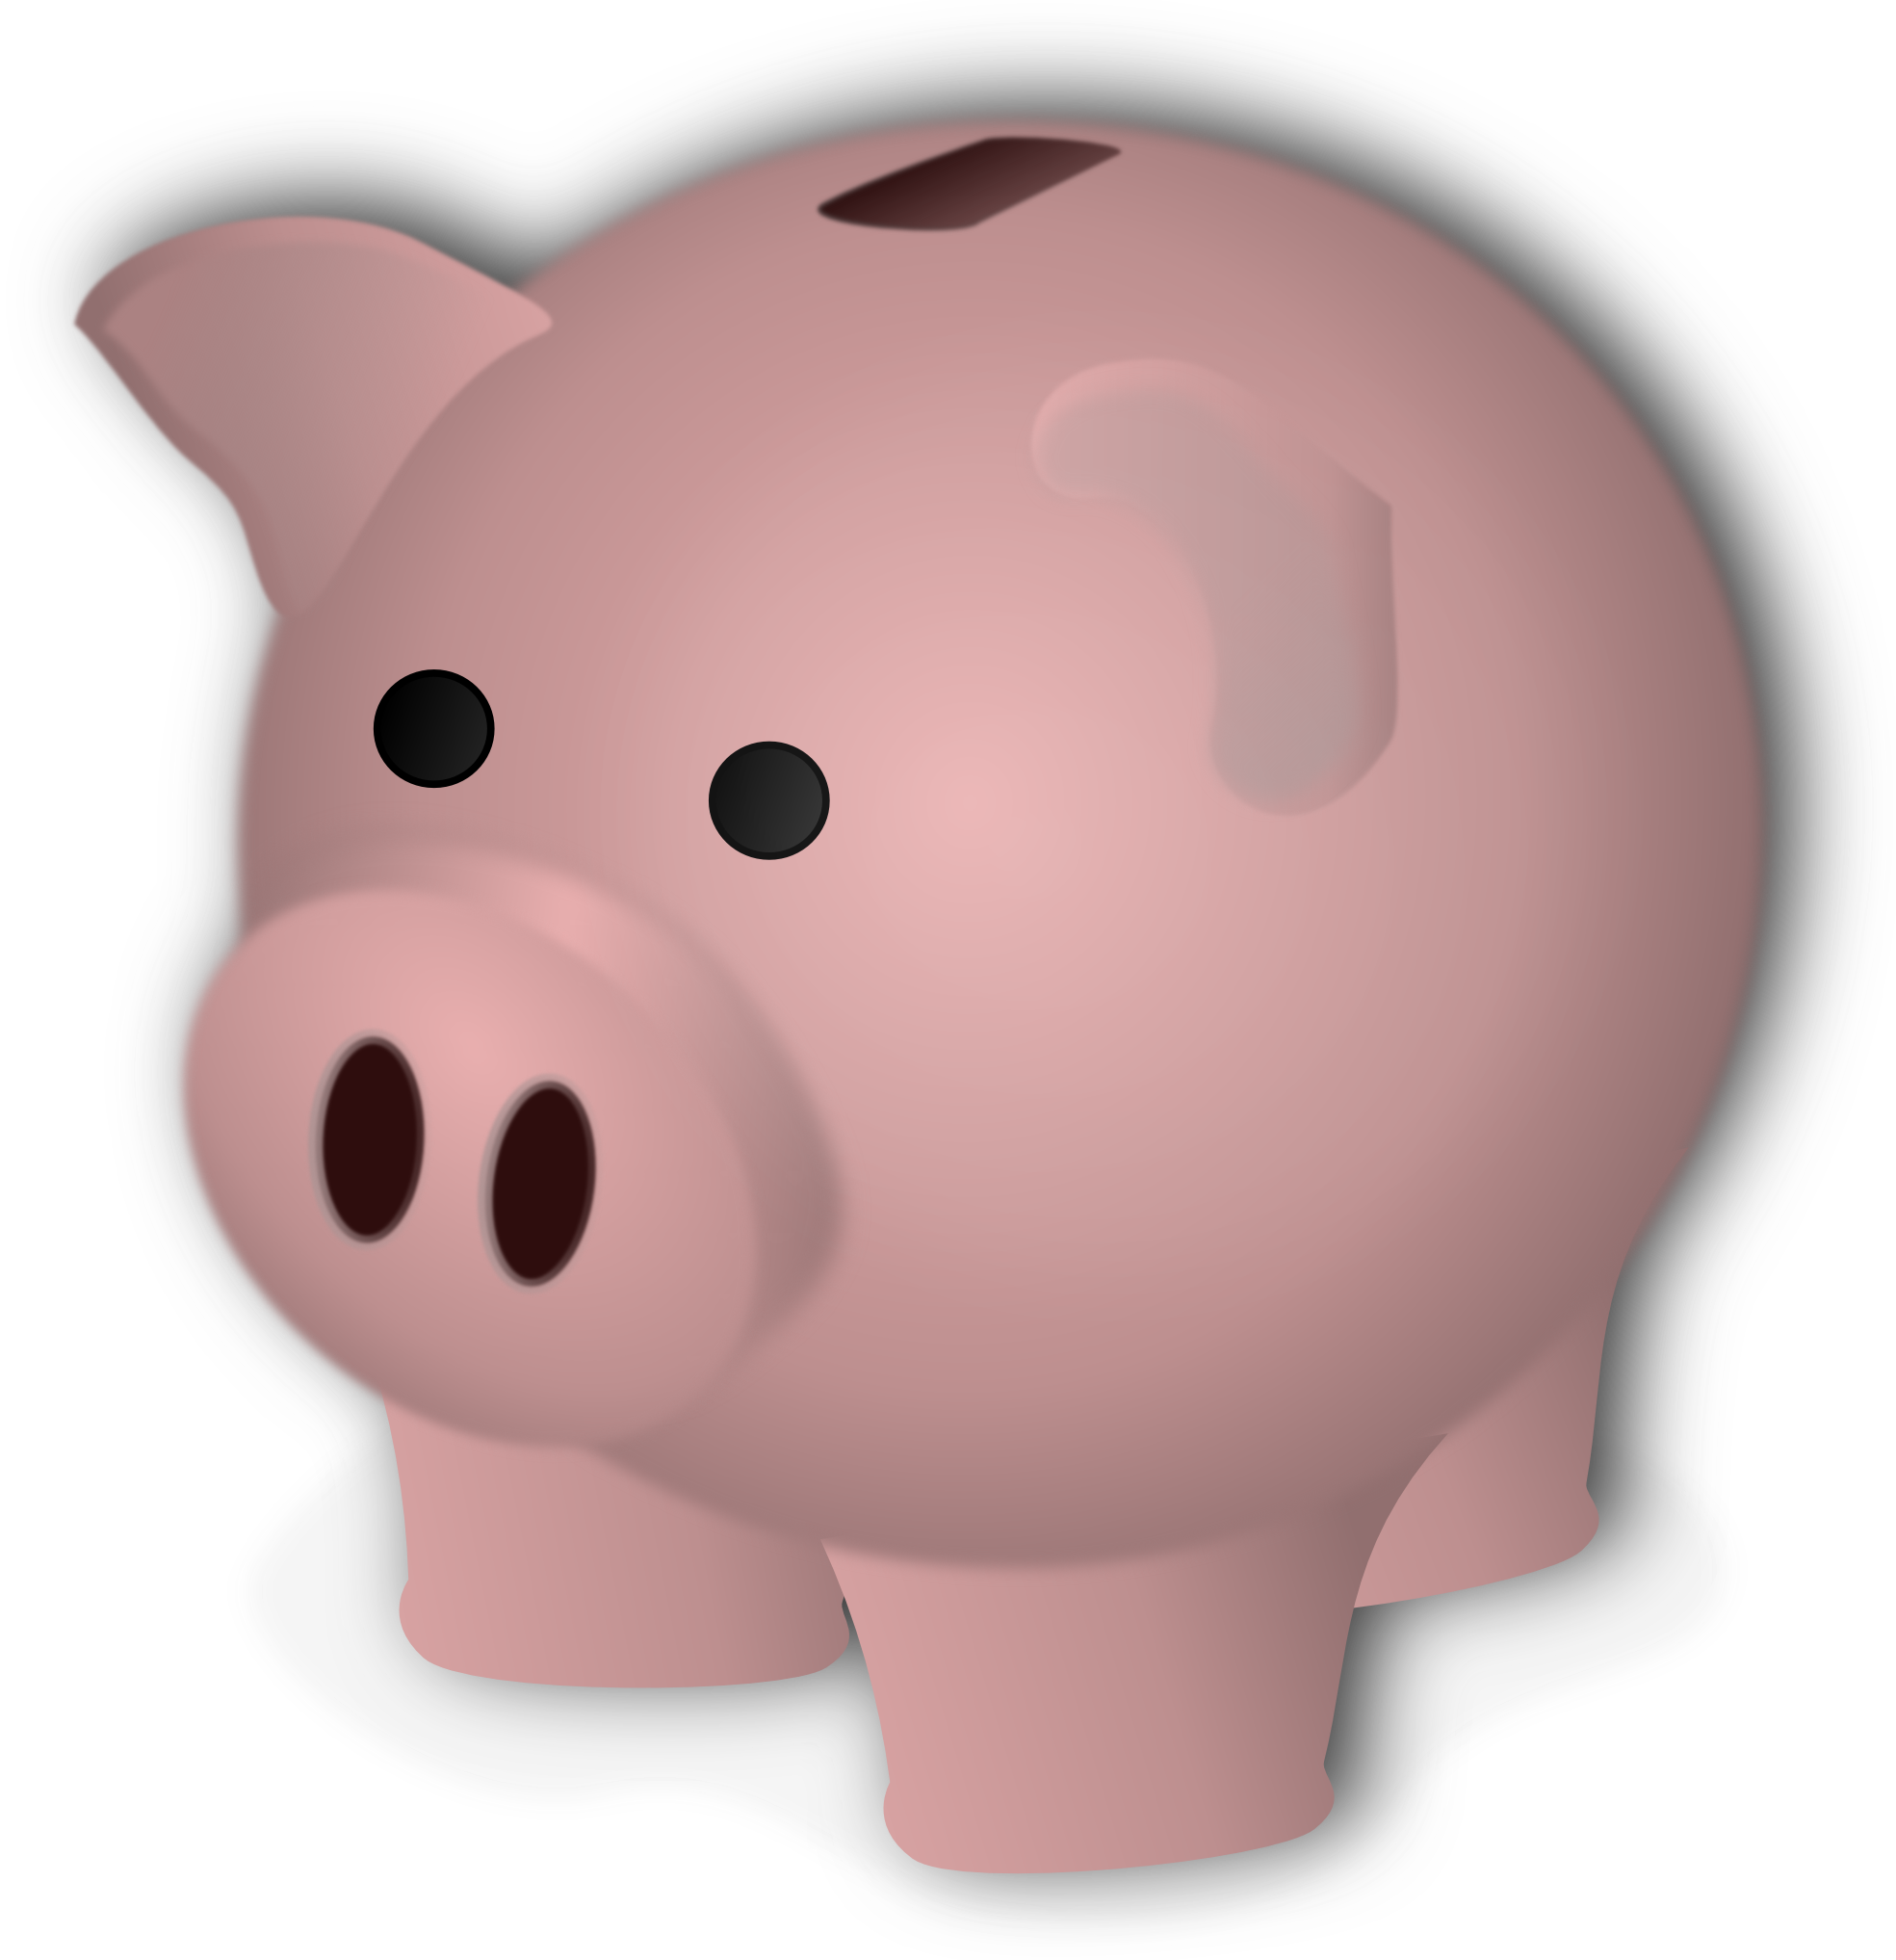 Piggy Bank PNG Free Image